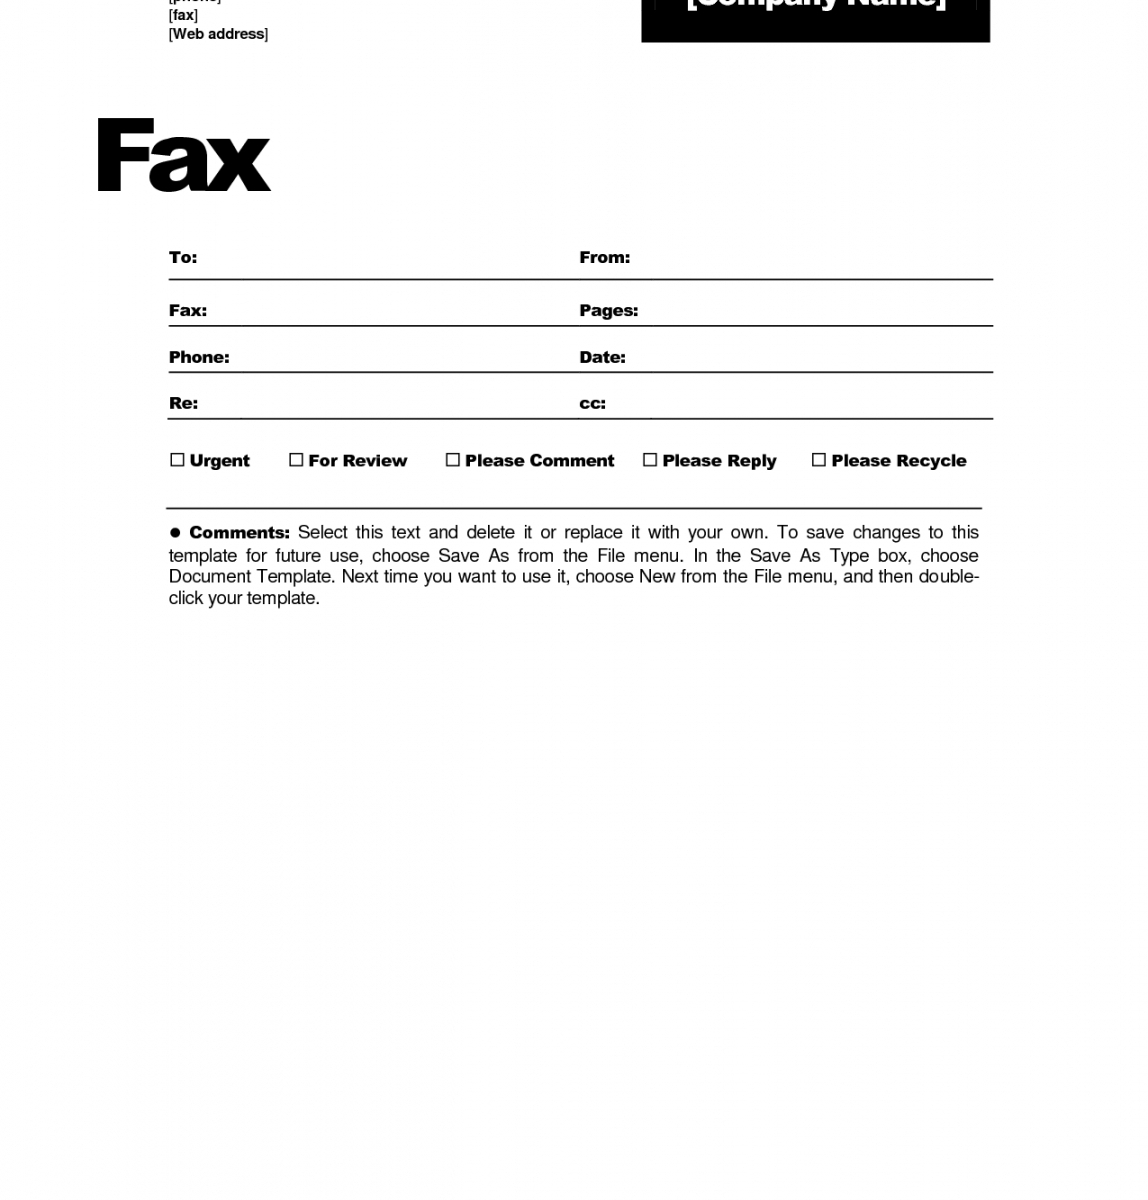 037 Fax Cover Sheet Template Word Ideas Editable How To Make In Fax Cover Sheet Template Word 2010